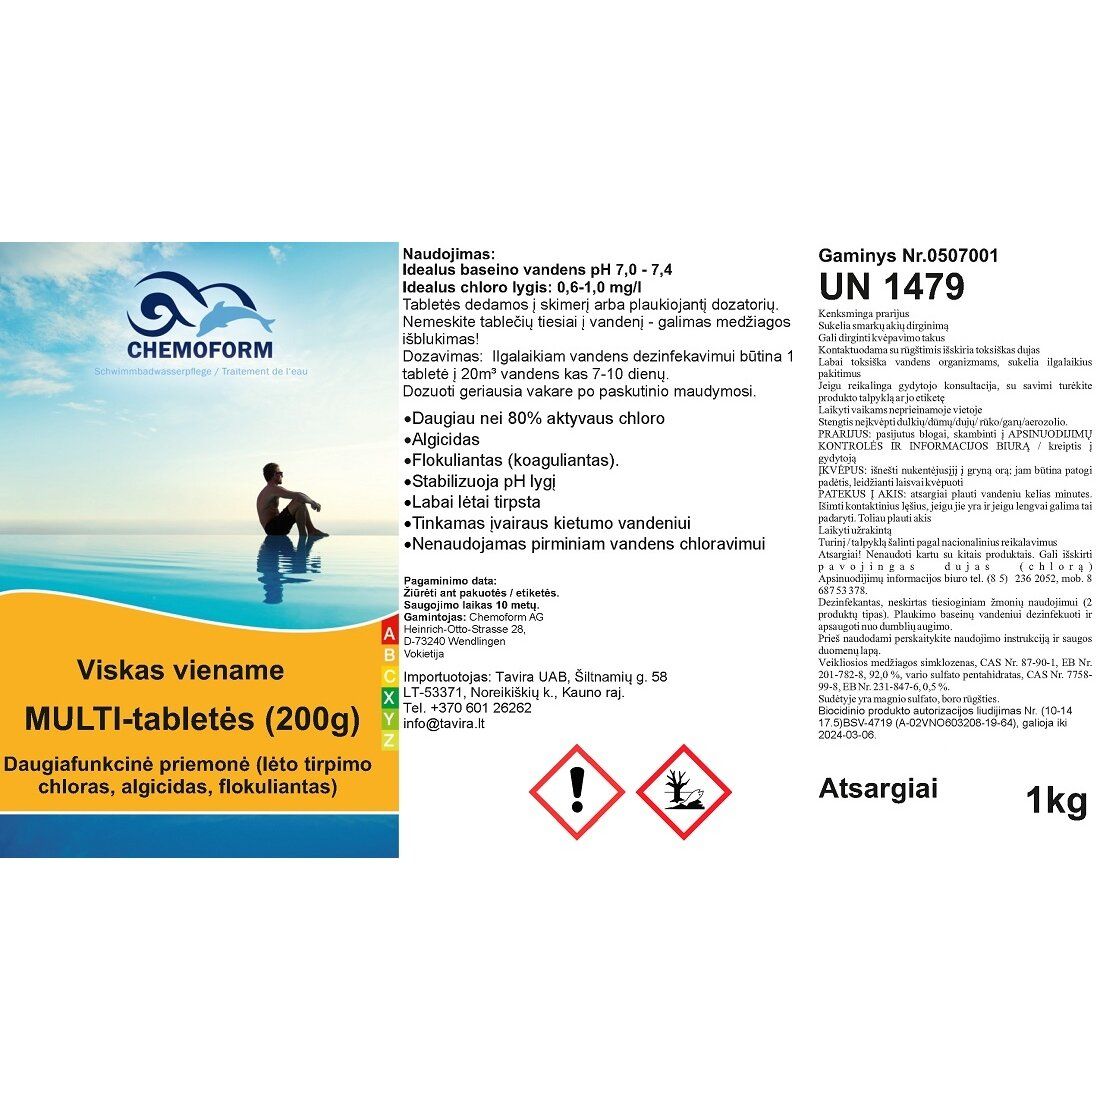 Multi tabletės 200g (chloras, algicidas, flokuliantas) Chemoform, 1kg, 507001